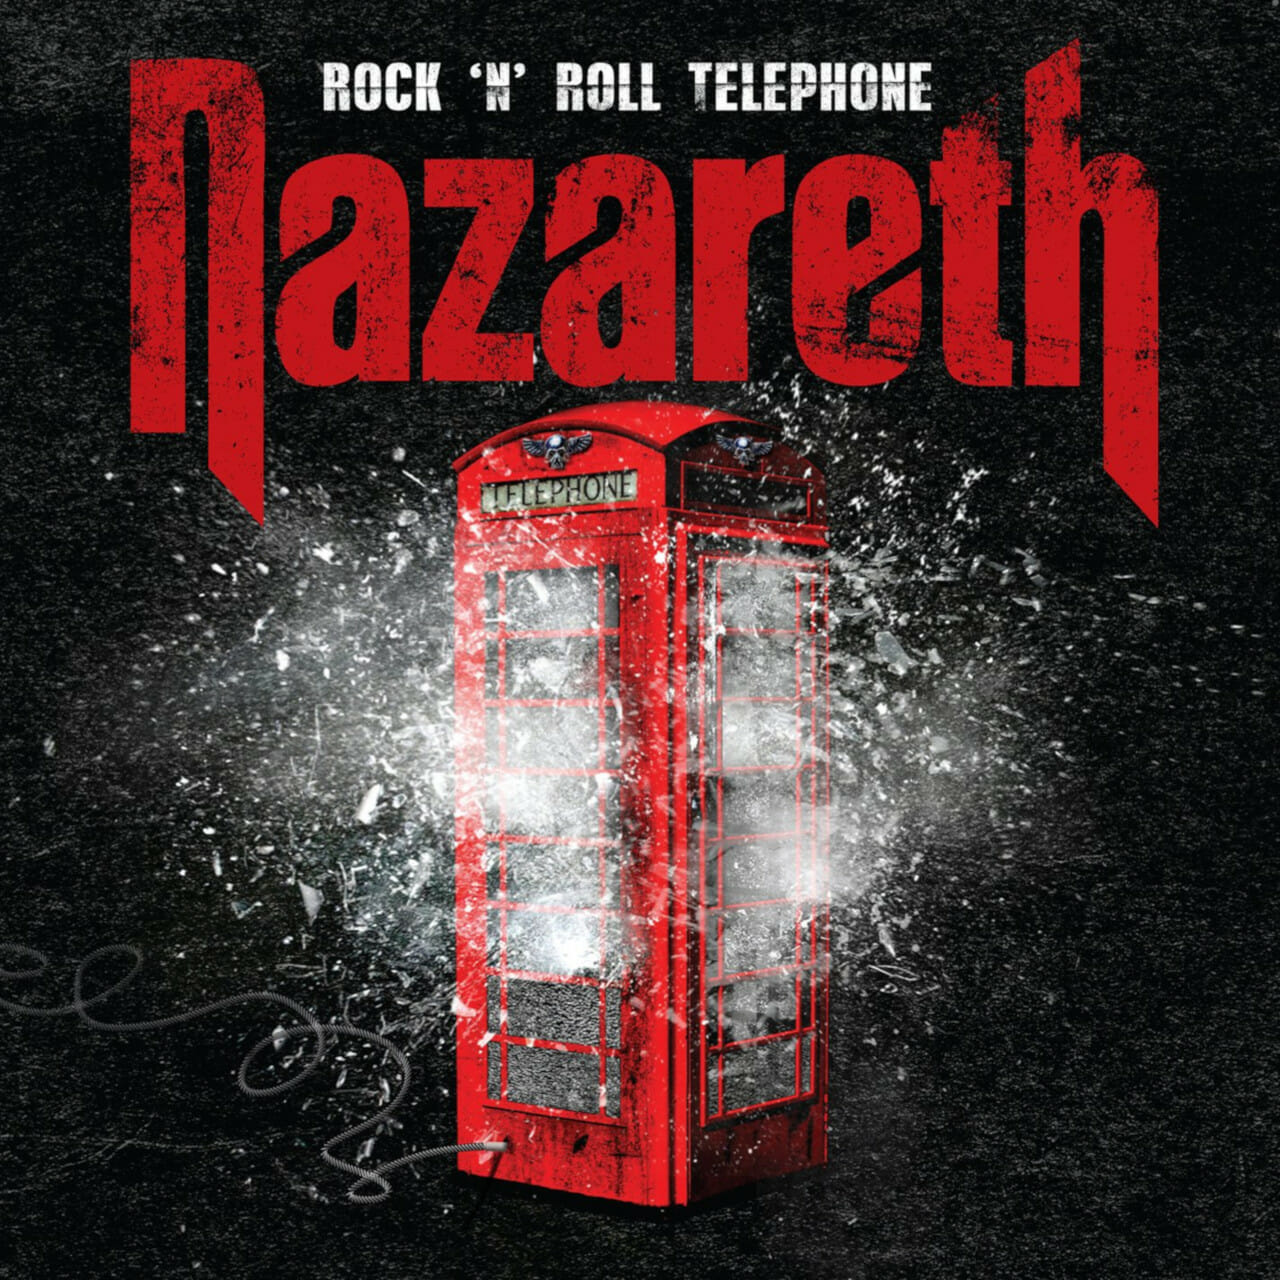 Telepon Nazareth Rock n Roll